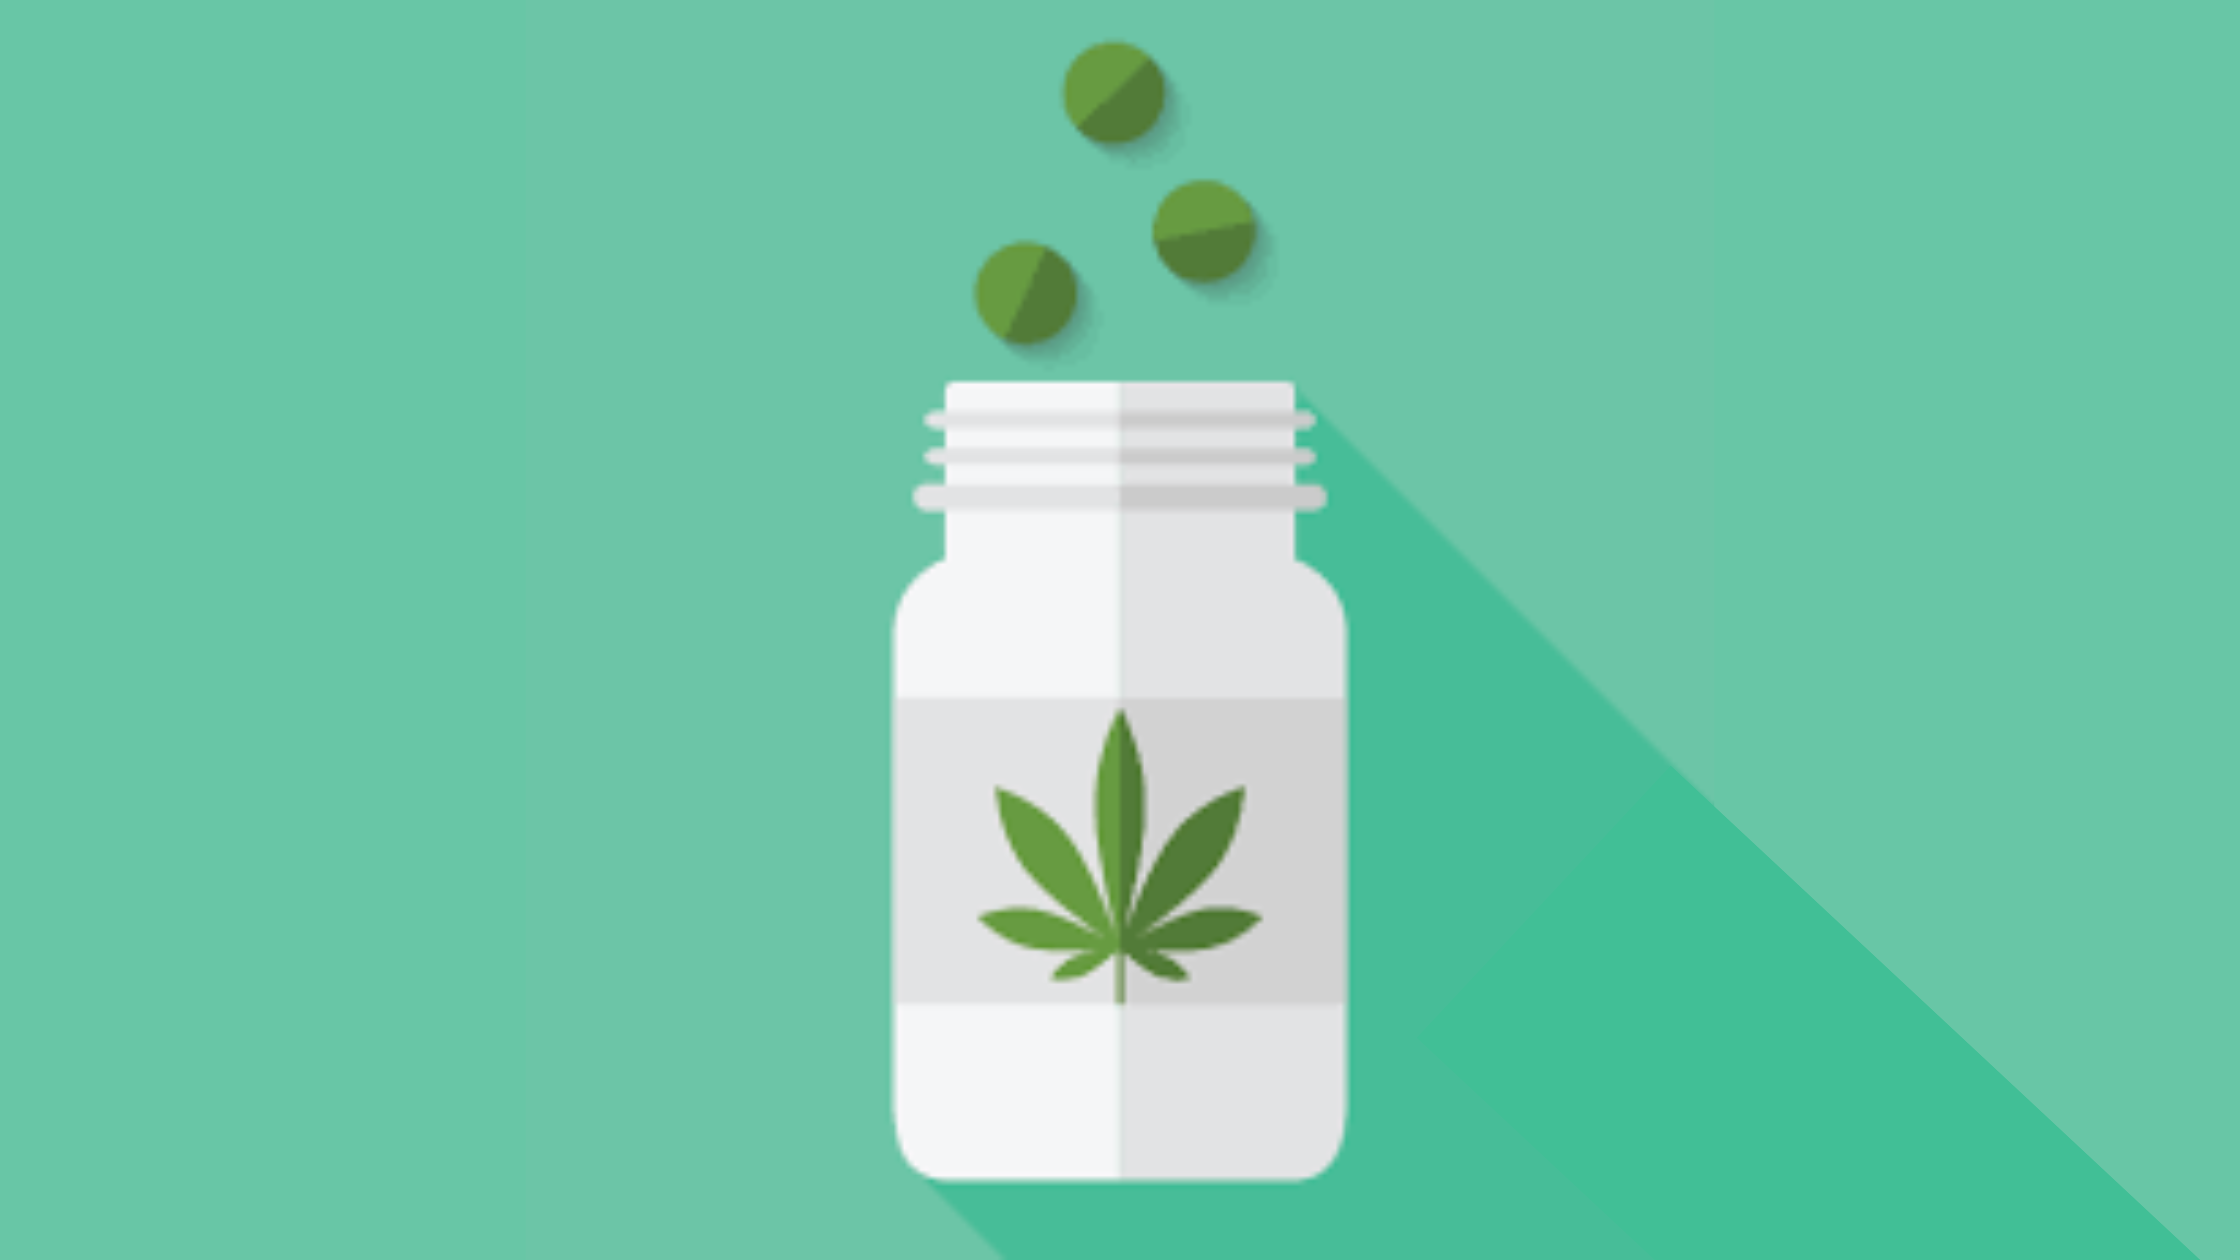 Illustrated representation of medical marijuana, using a prescription bottle with a marijuana leaf on the front.